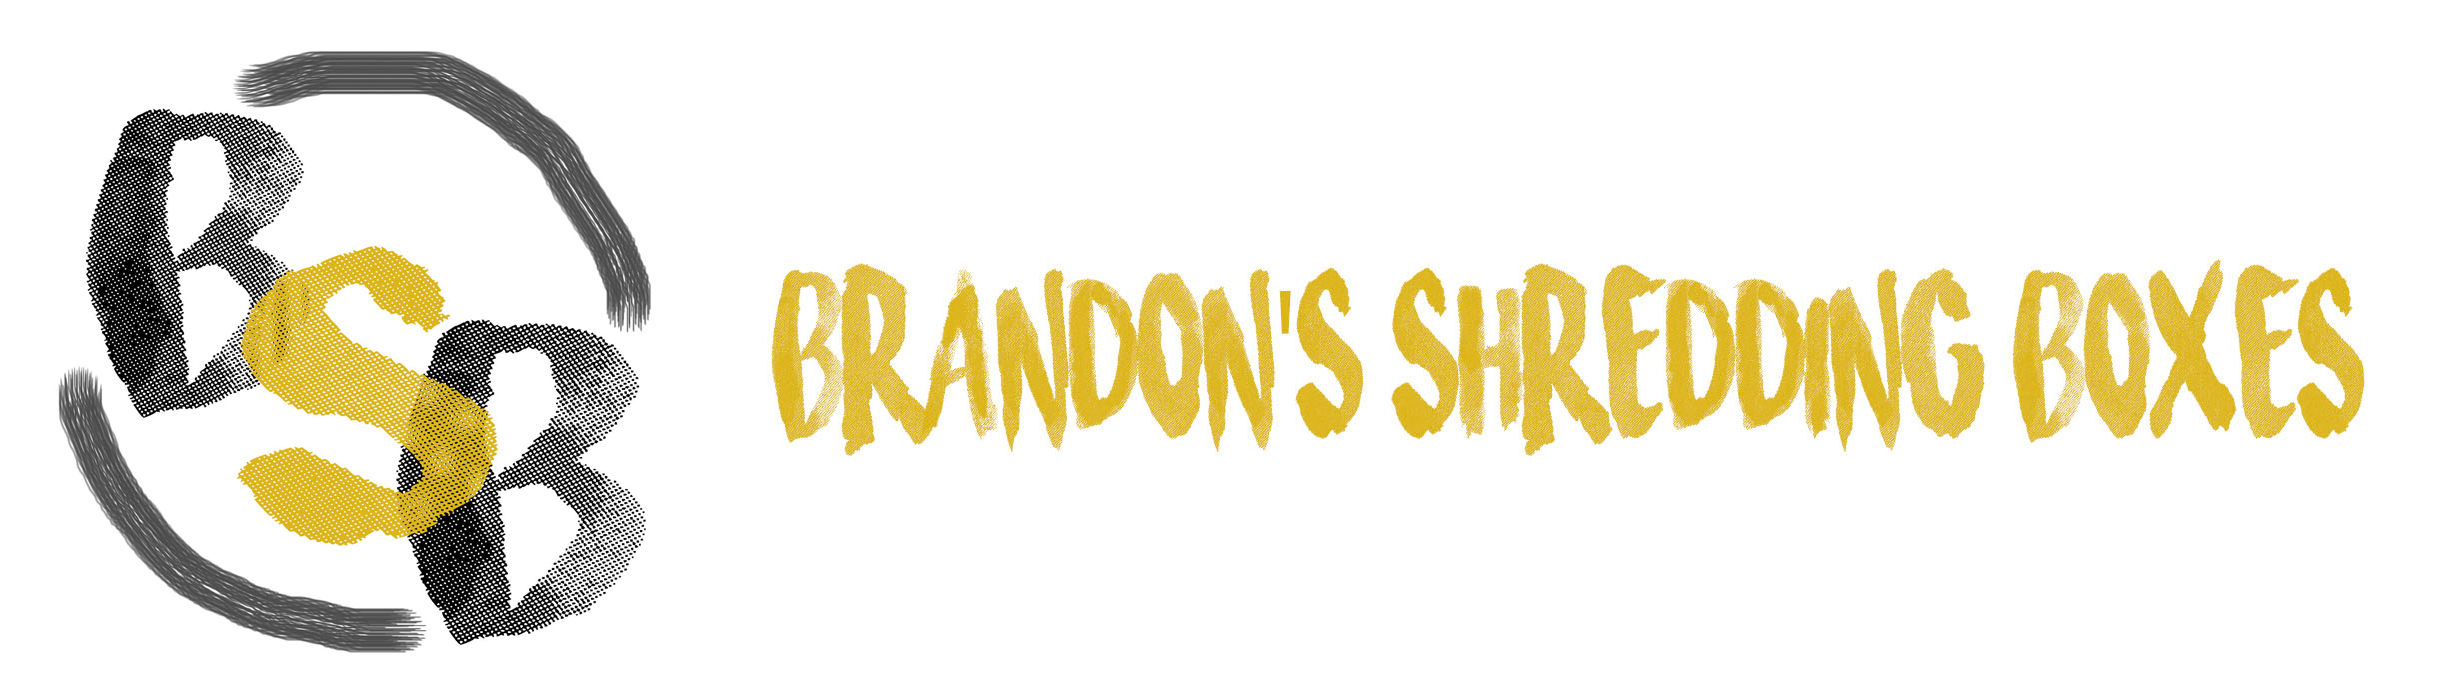 Brandons Shredding Boxes